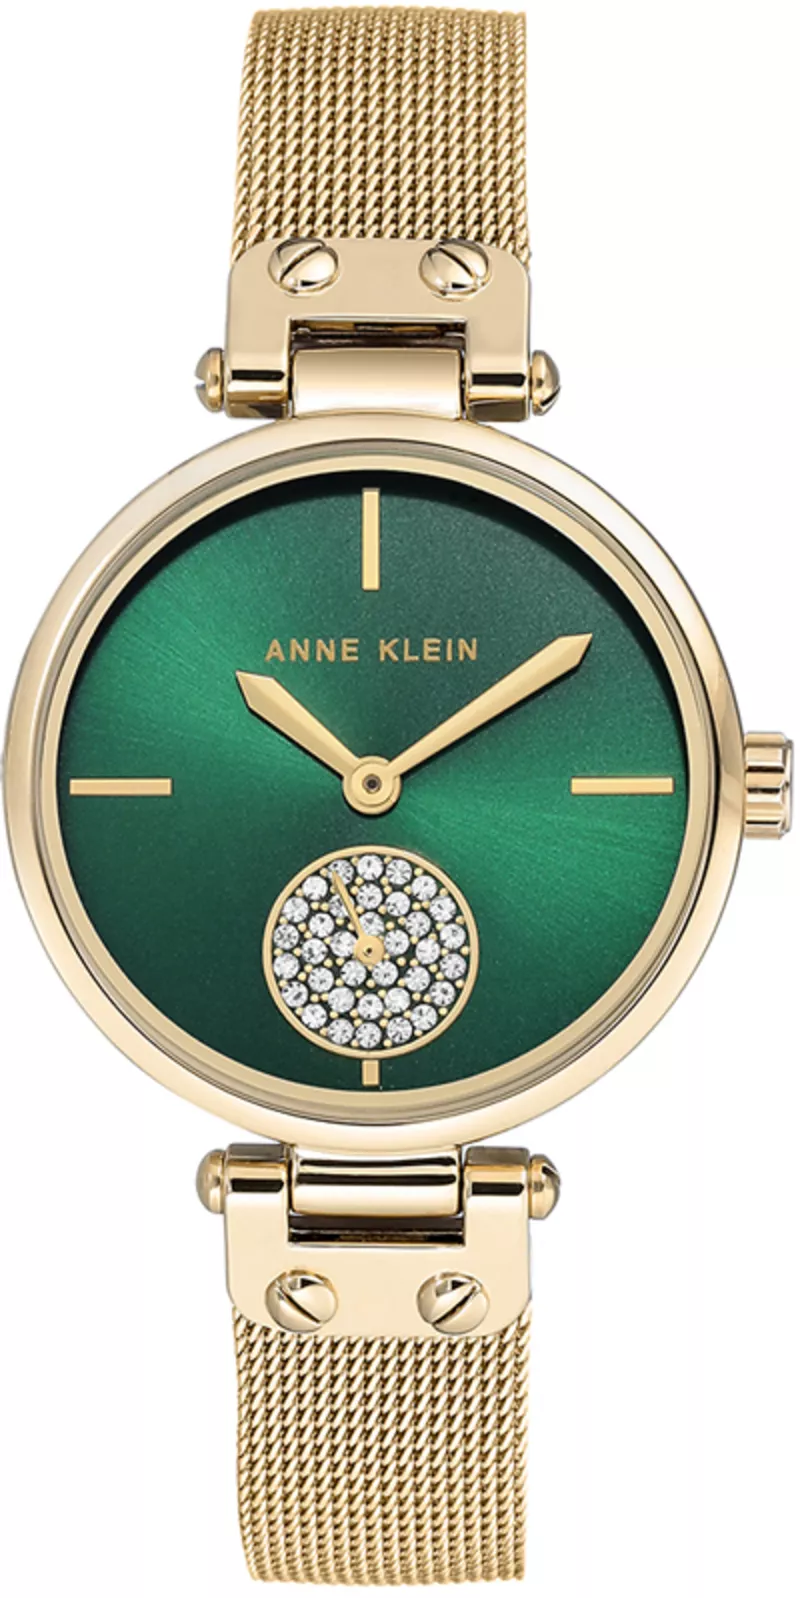 Часы Anne Klein AK/3000GNGB